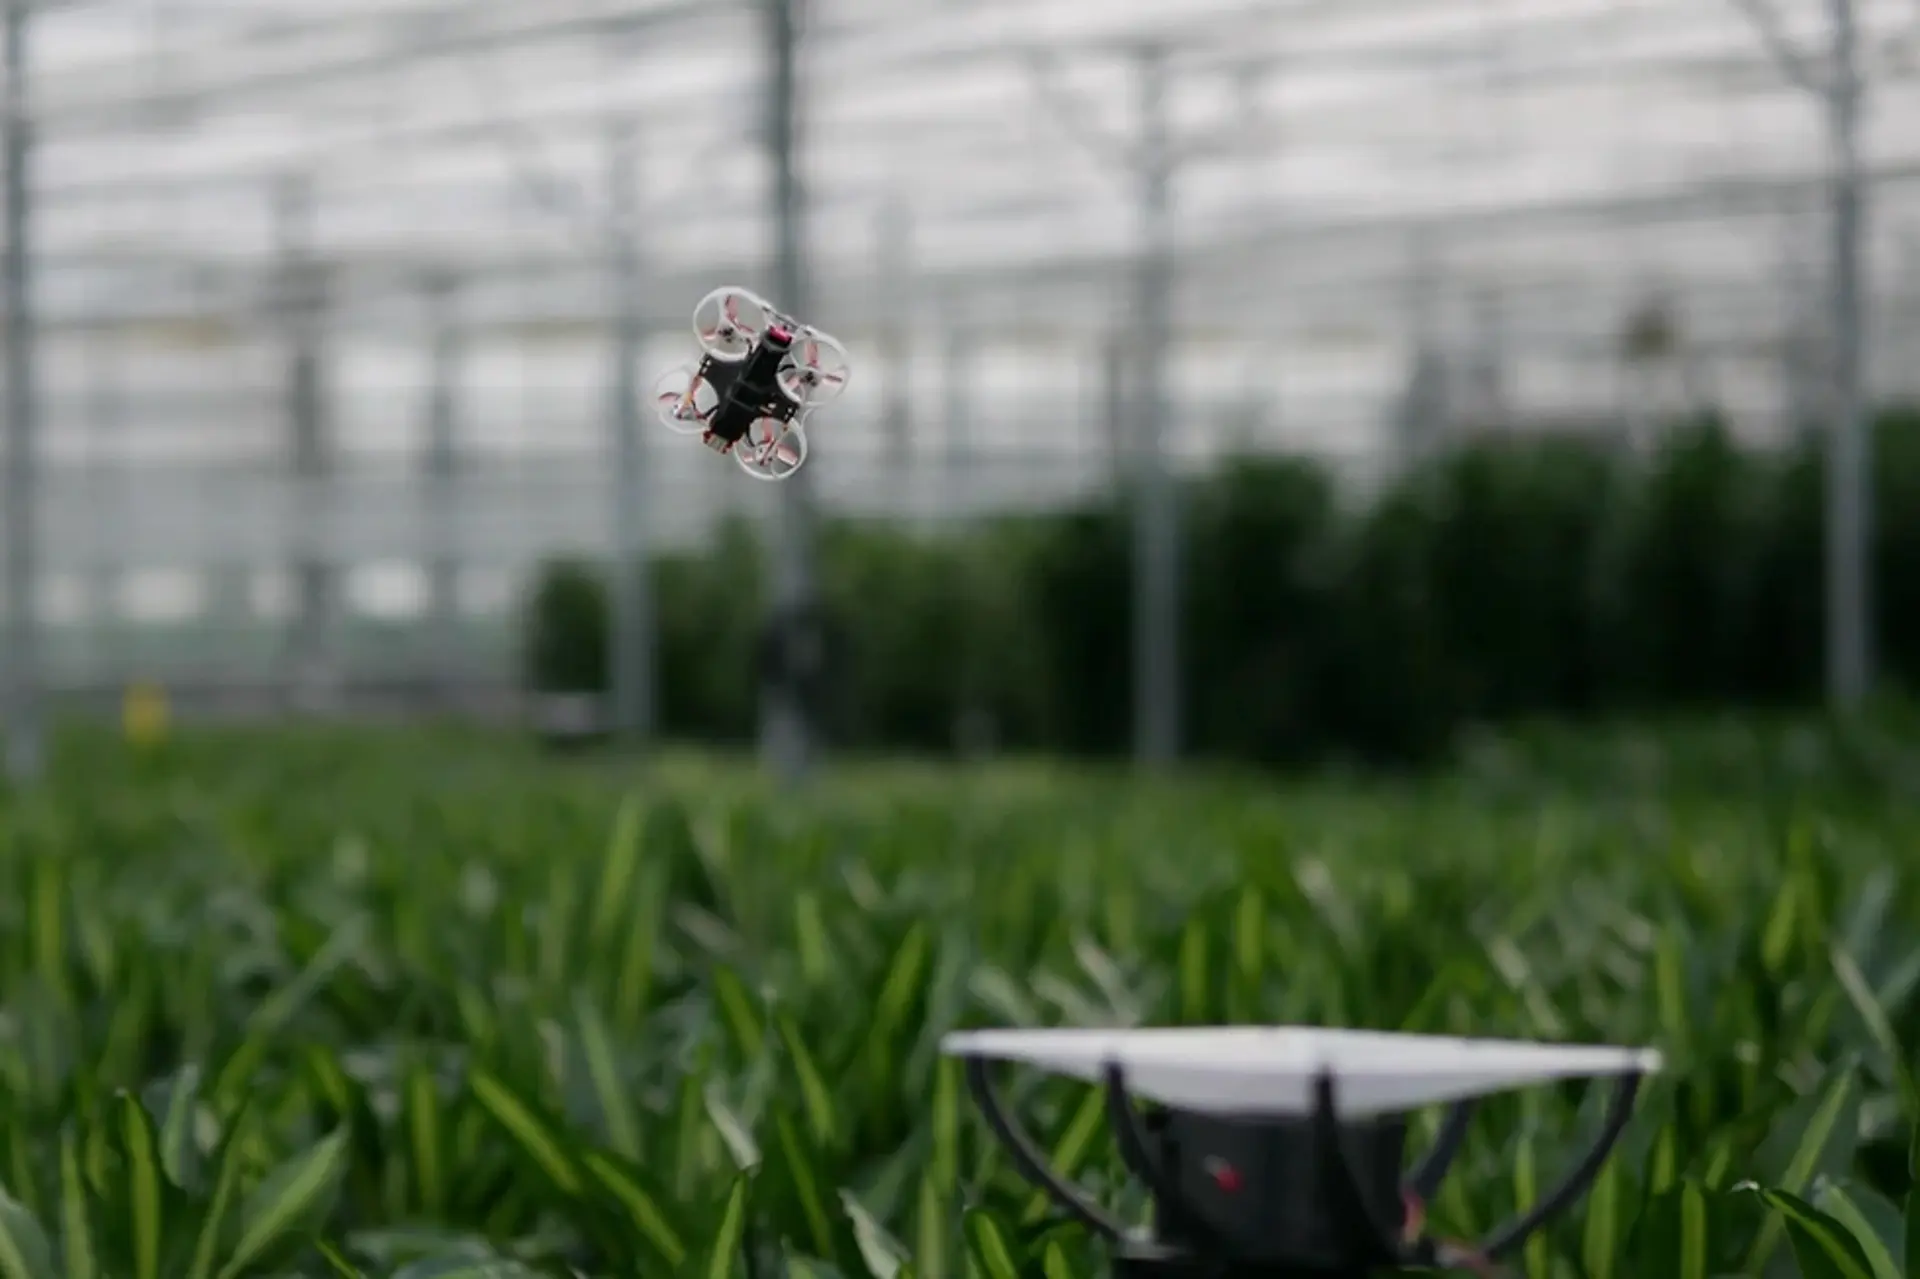 Nederlandske ingeniører vil utrydde insekter i drivhus ved hjelp av droner, IR-kameraer og kunstig intelligens.